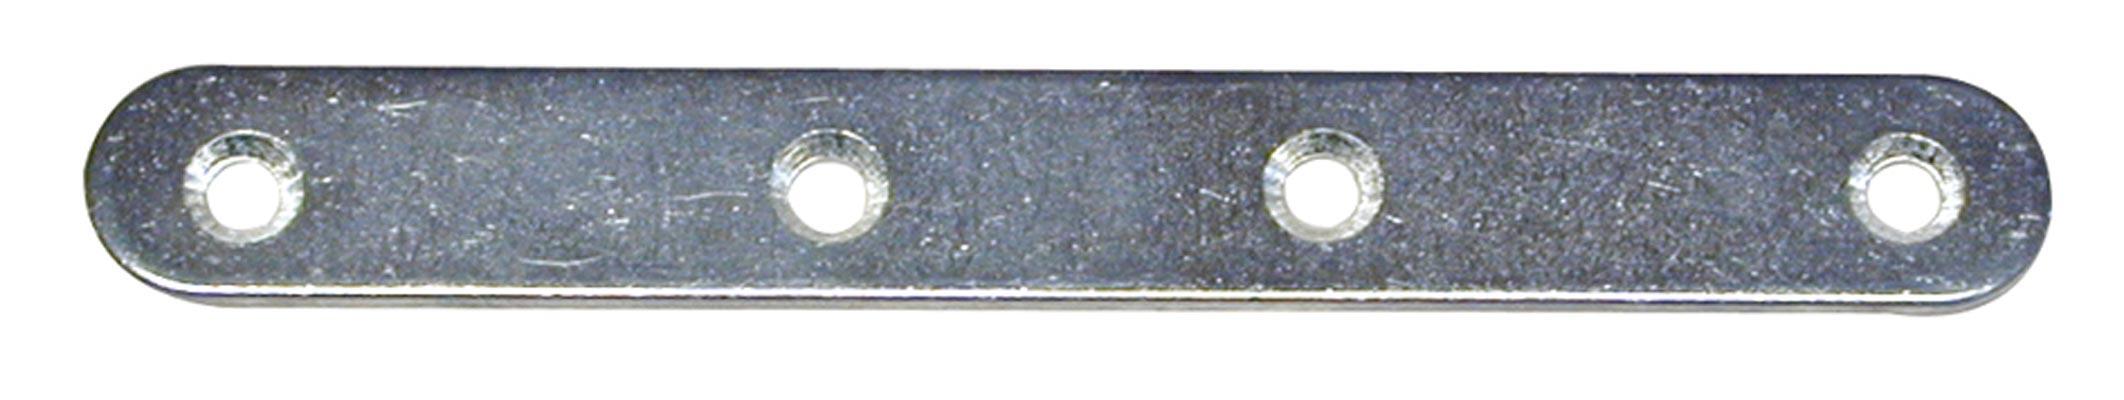 pásek spojovací  60mm   (10ks) 0.12 Kg MAXMIX Sklad14 523758 17